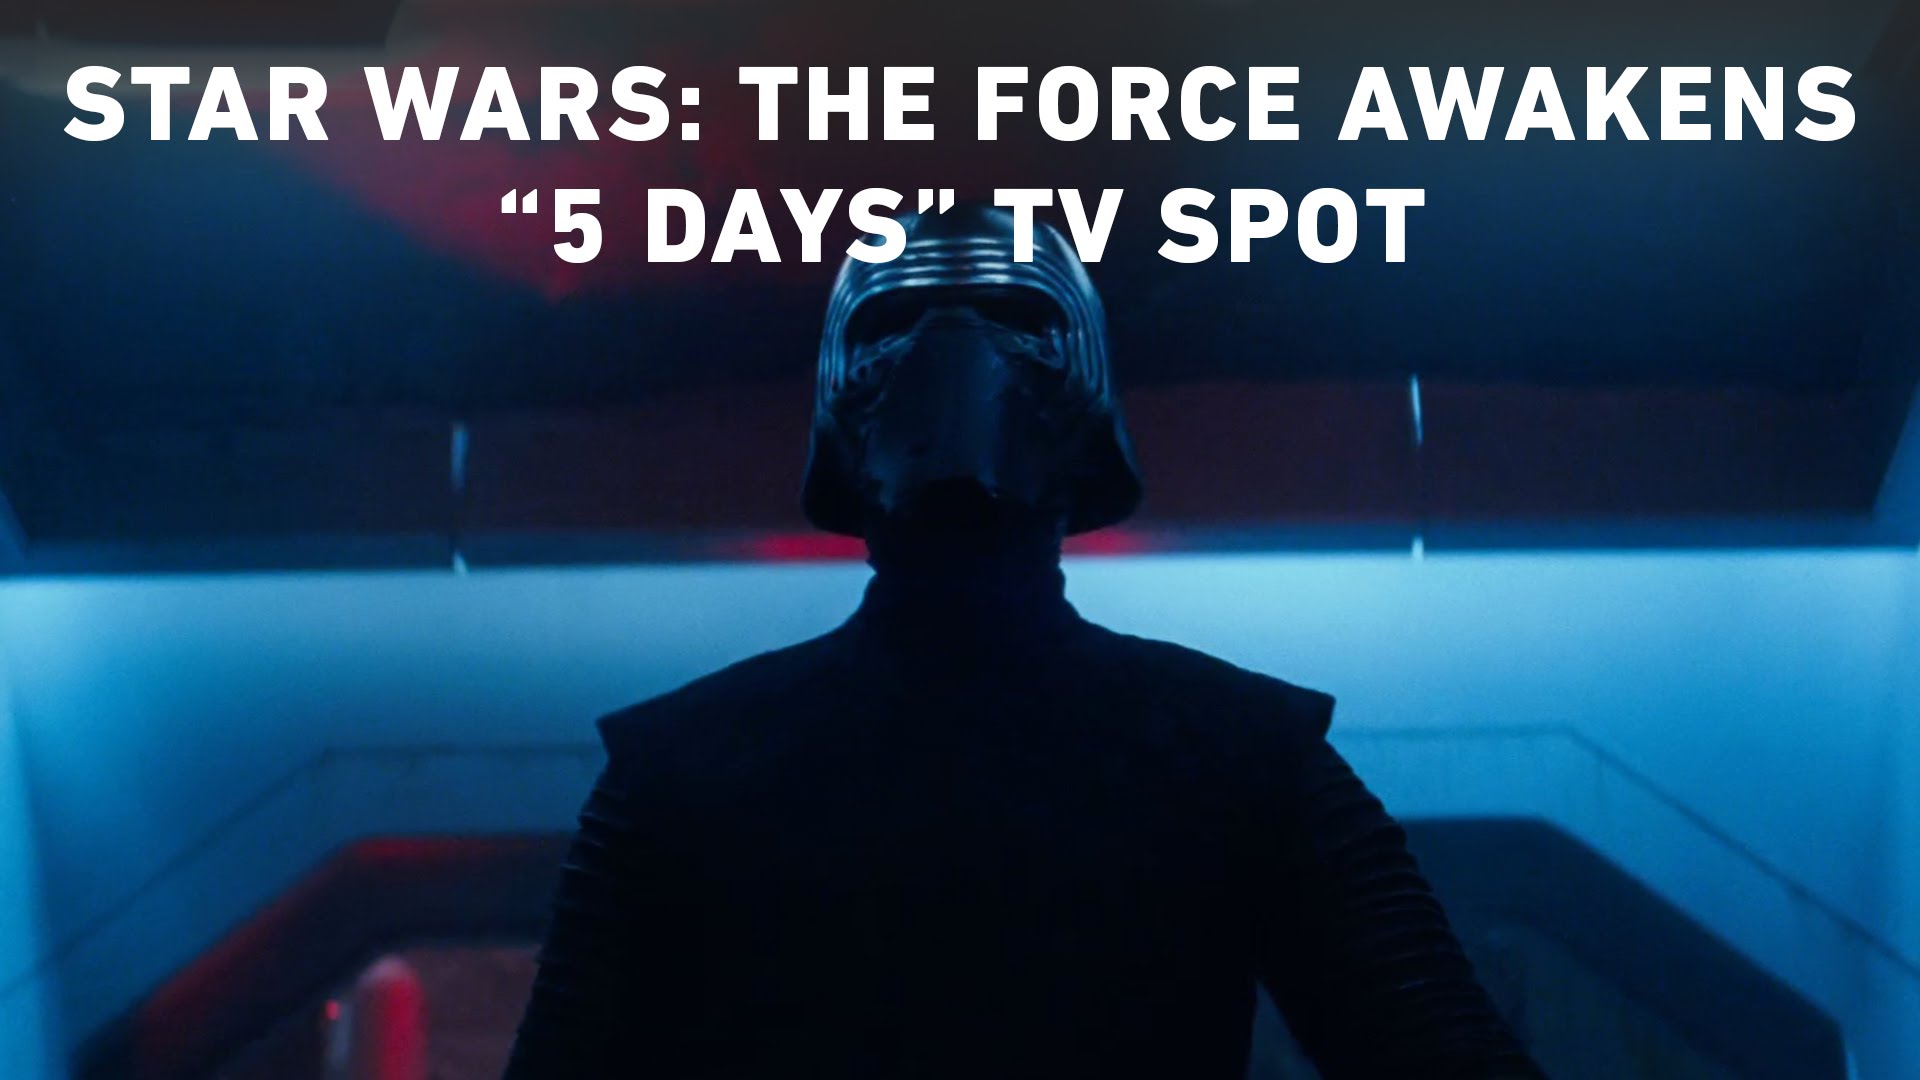 Star Wars: The Force Awakens “5 Days” TV Spot